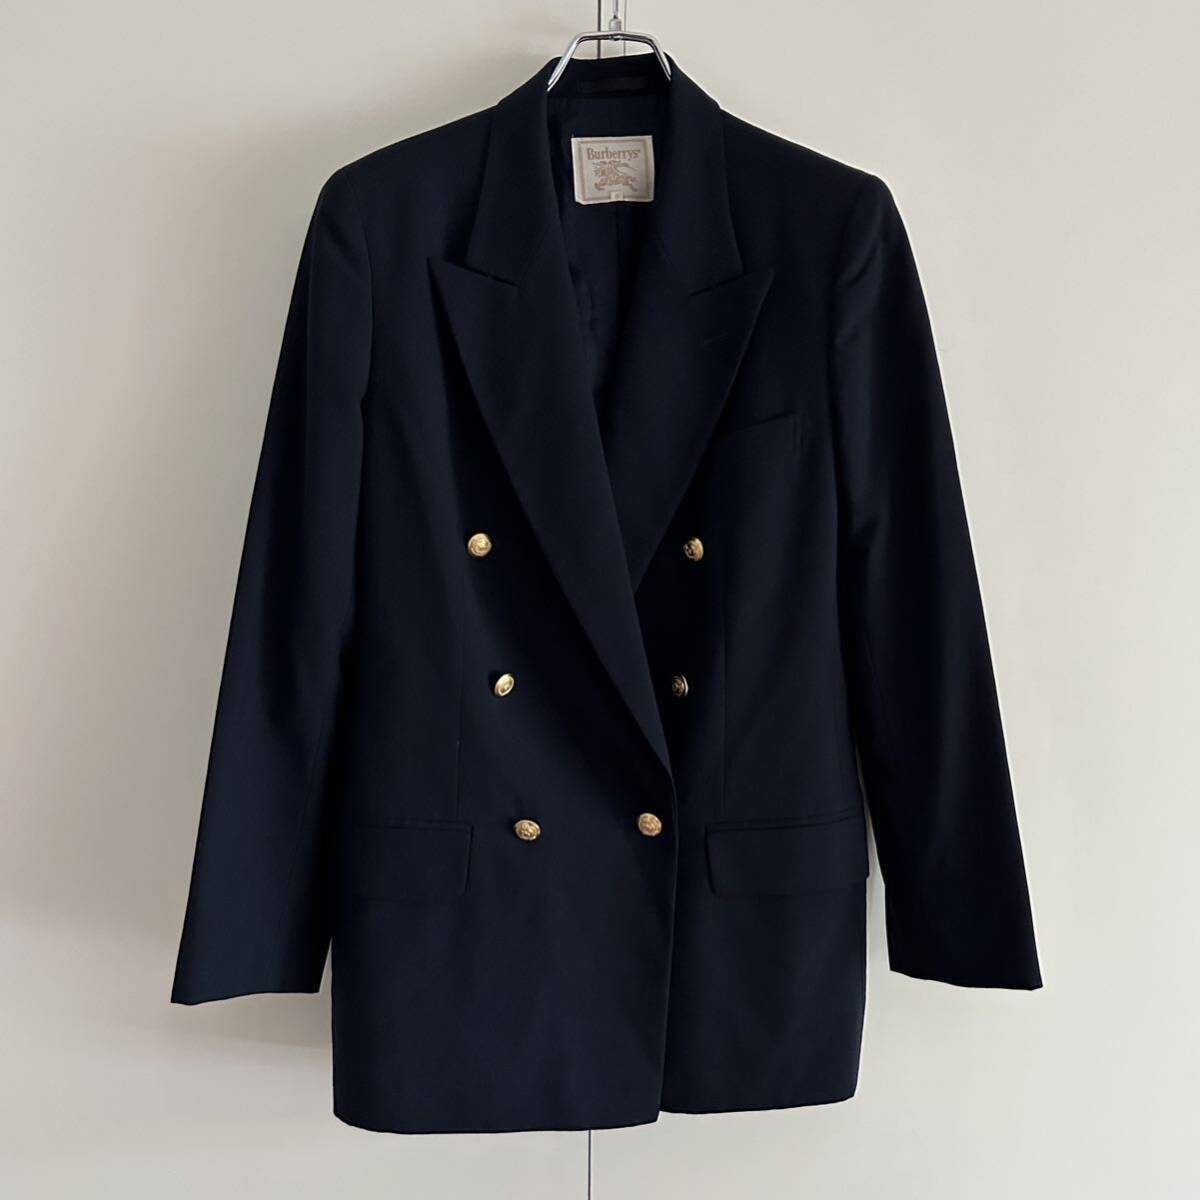 80s 90s Burberrys Burberry z Burberry двойной breast tailored jacket блейзер темно-синий 11 золотой кнопка темно-синий пятно б/у одежда 